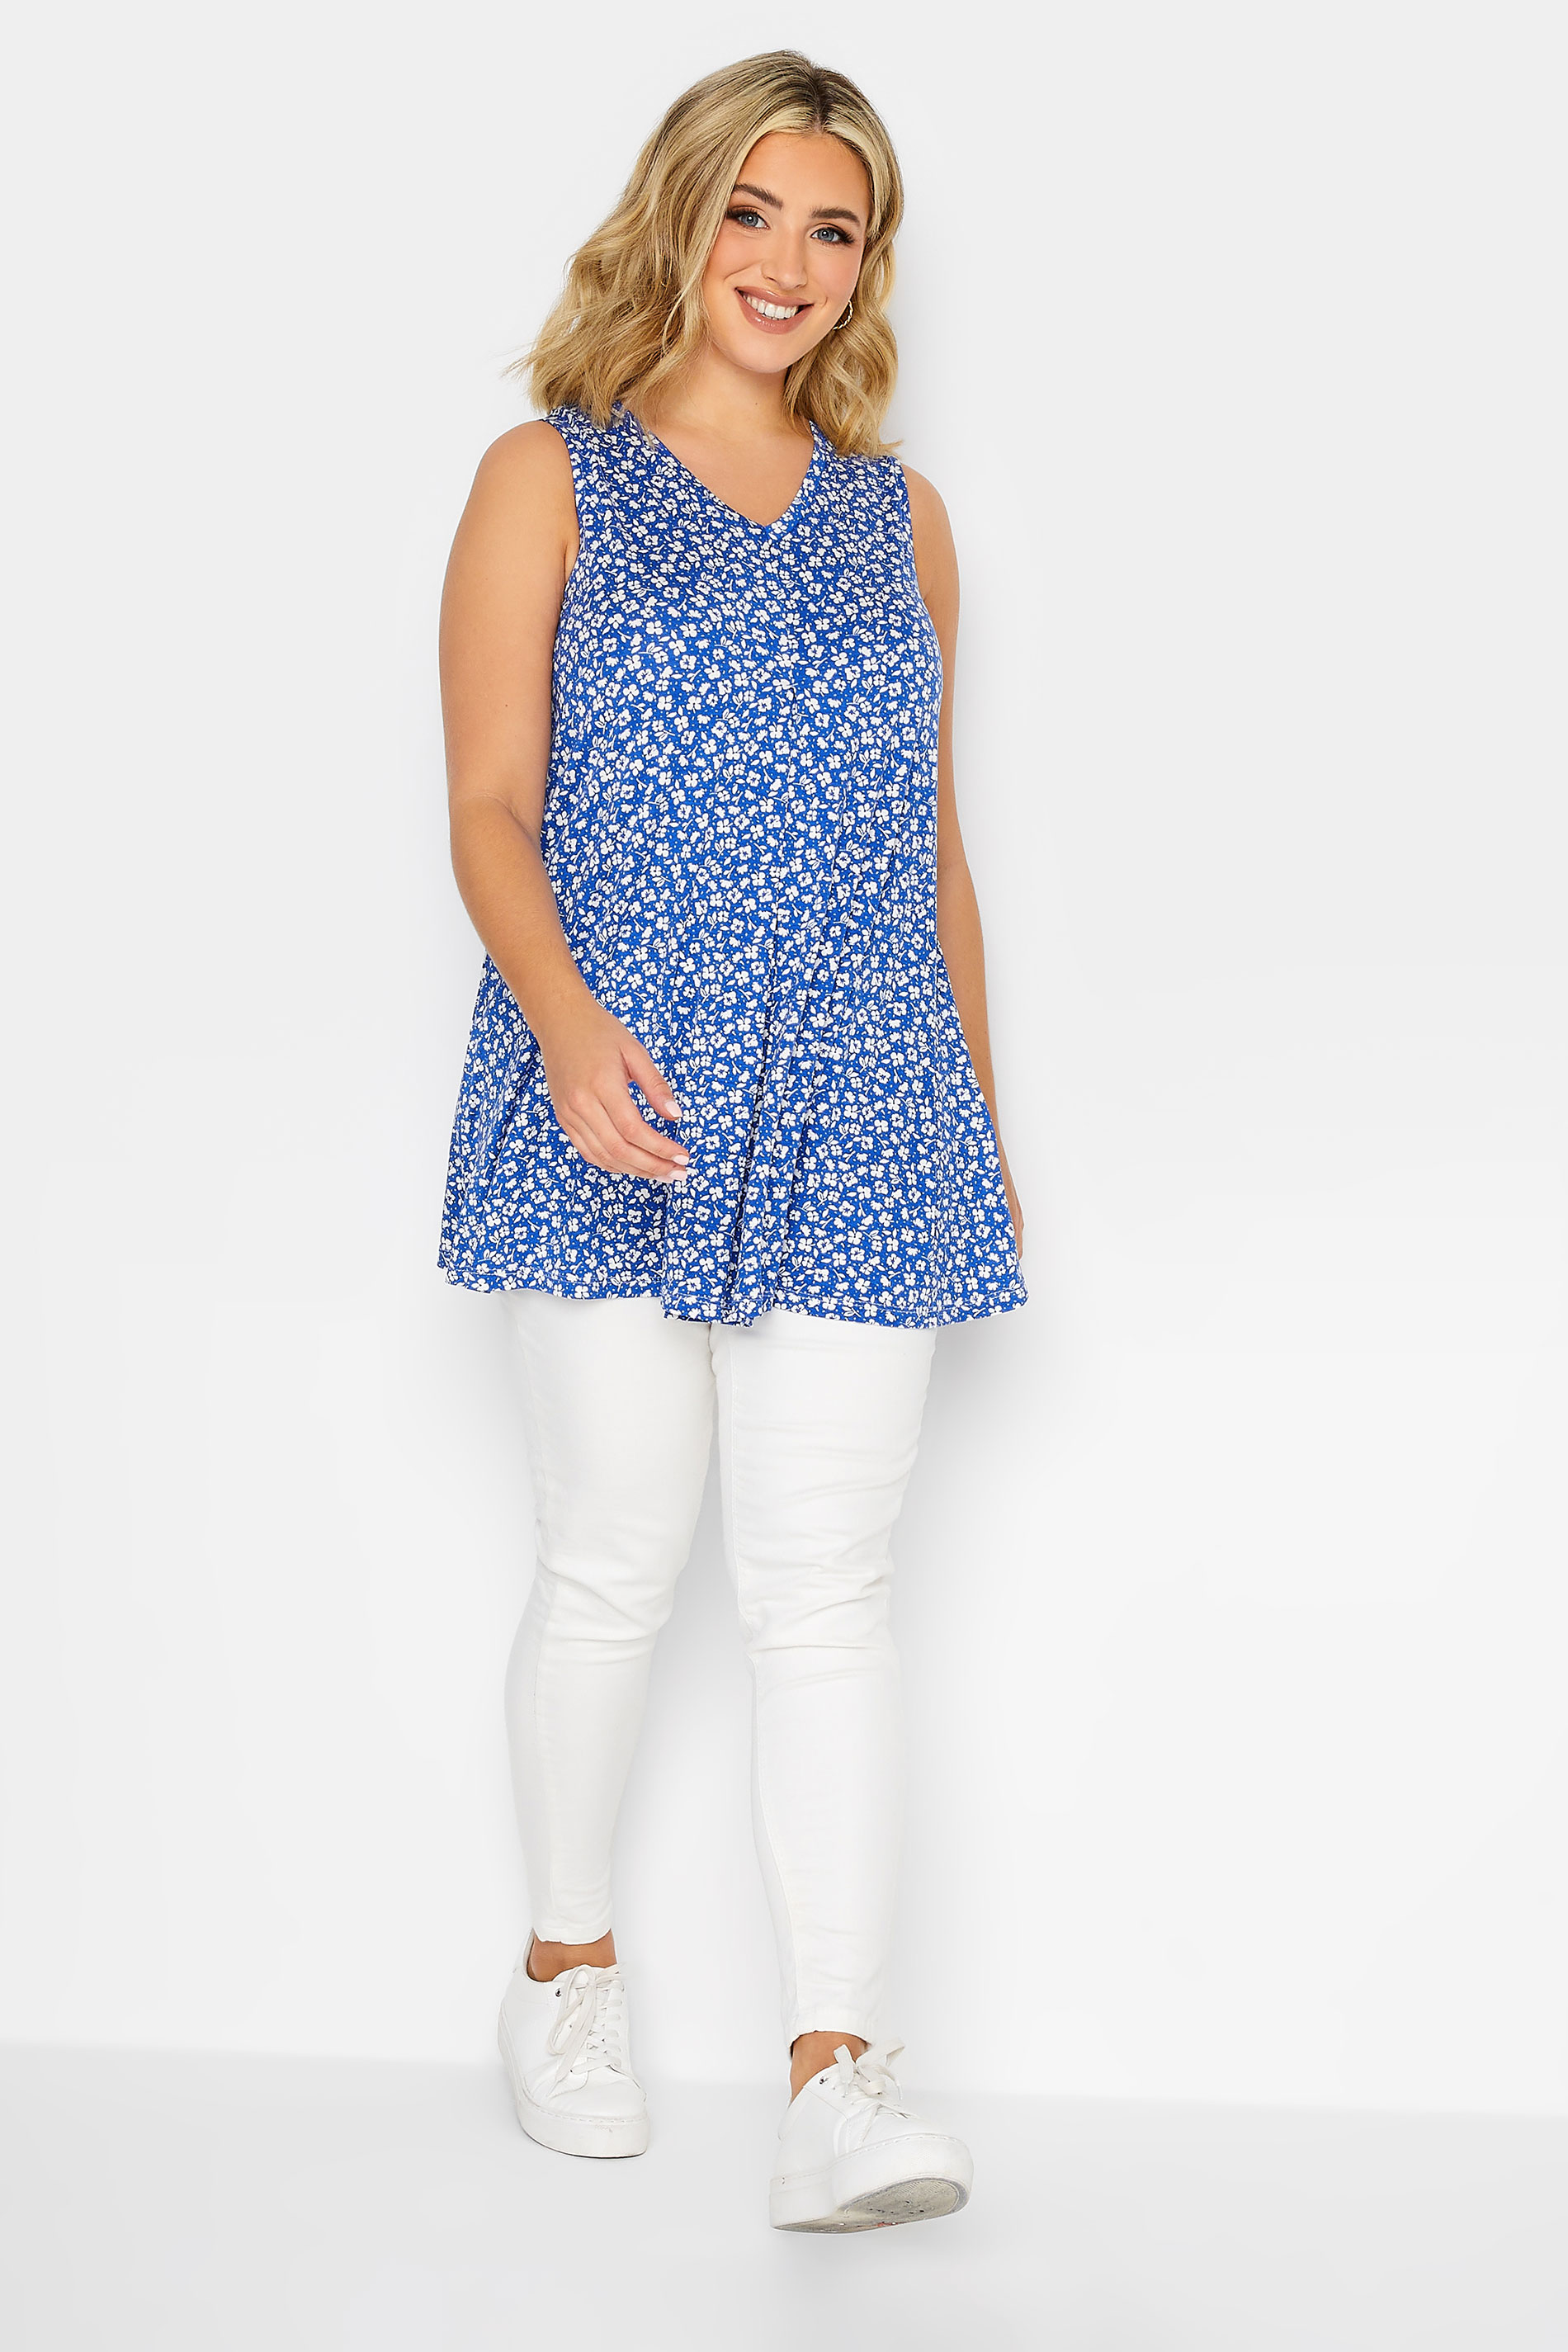 YOURS Plus Size Blue Floral Print Pleat Front Vest Top | Yours Clothing 2